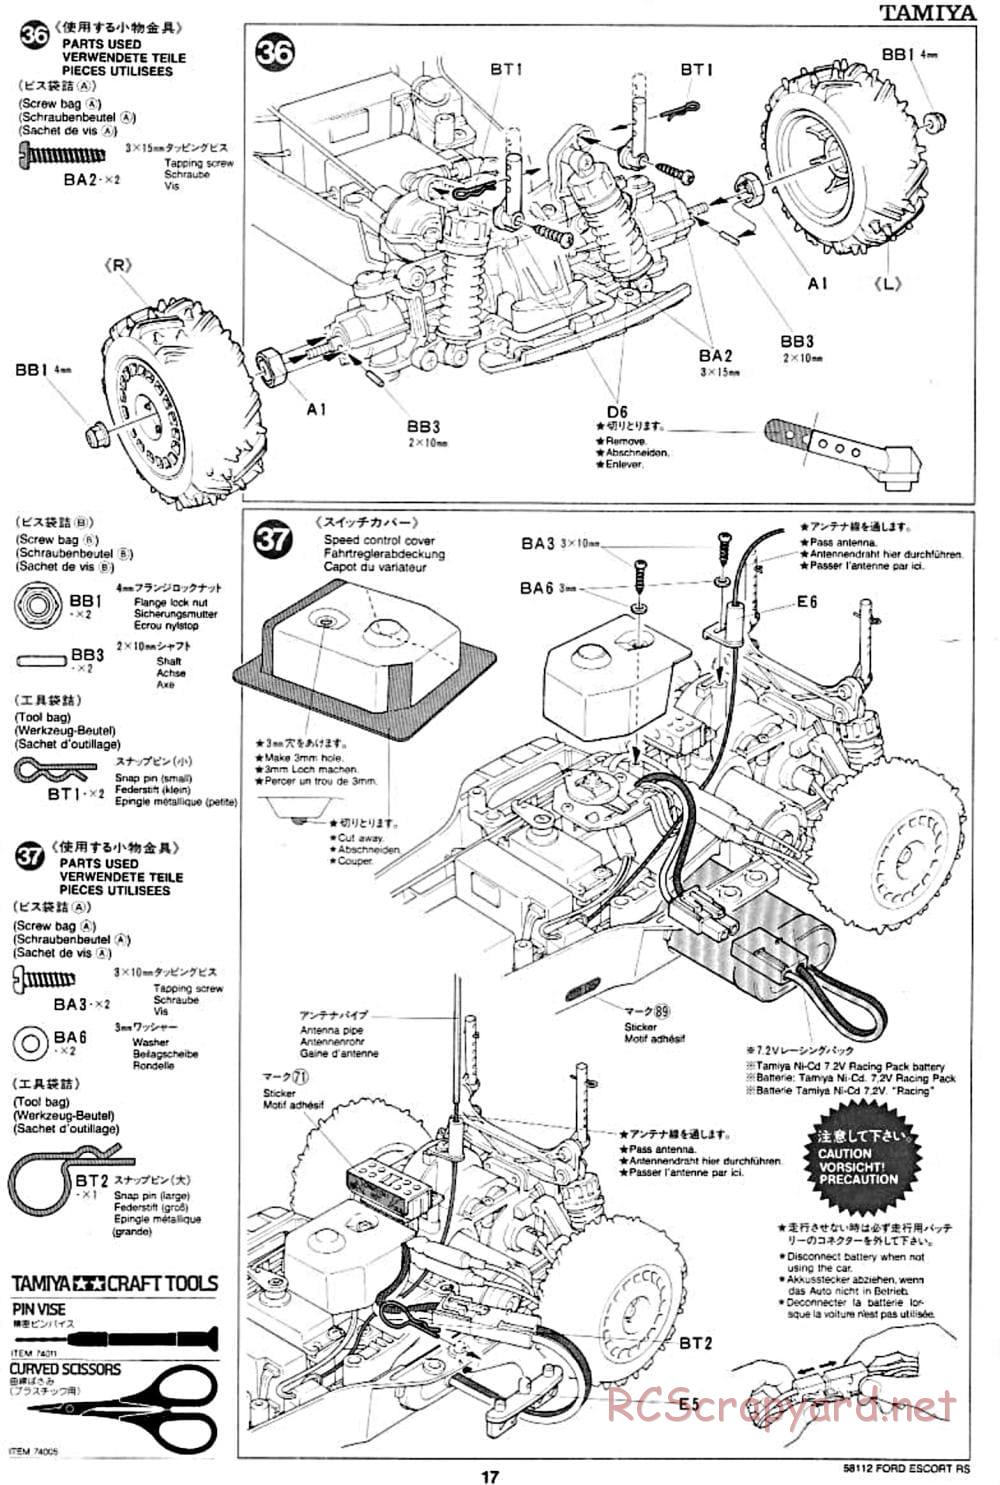 Tamiya - Ford Escort RS Cosworth - TA-01 Chassis - Manual - Page 17